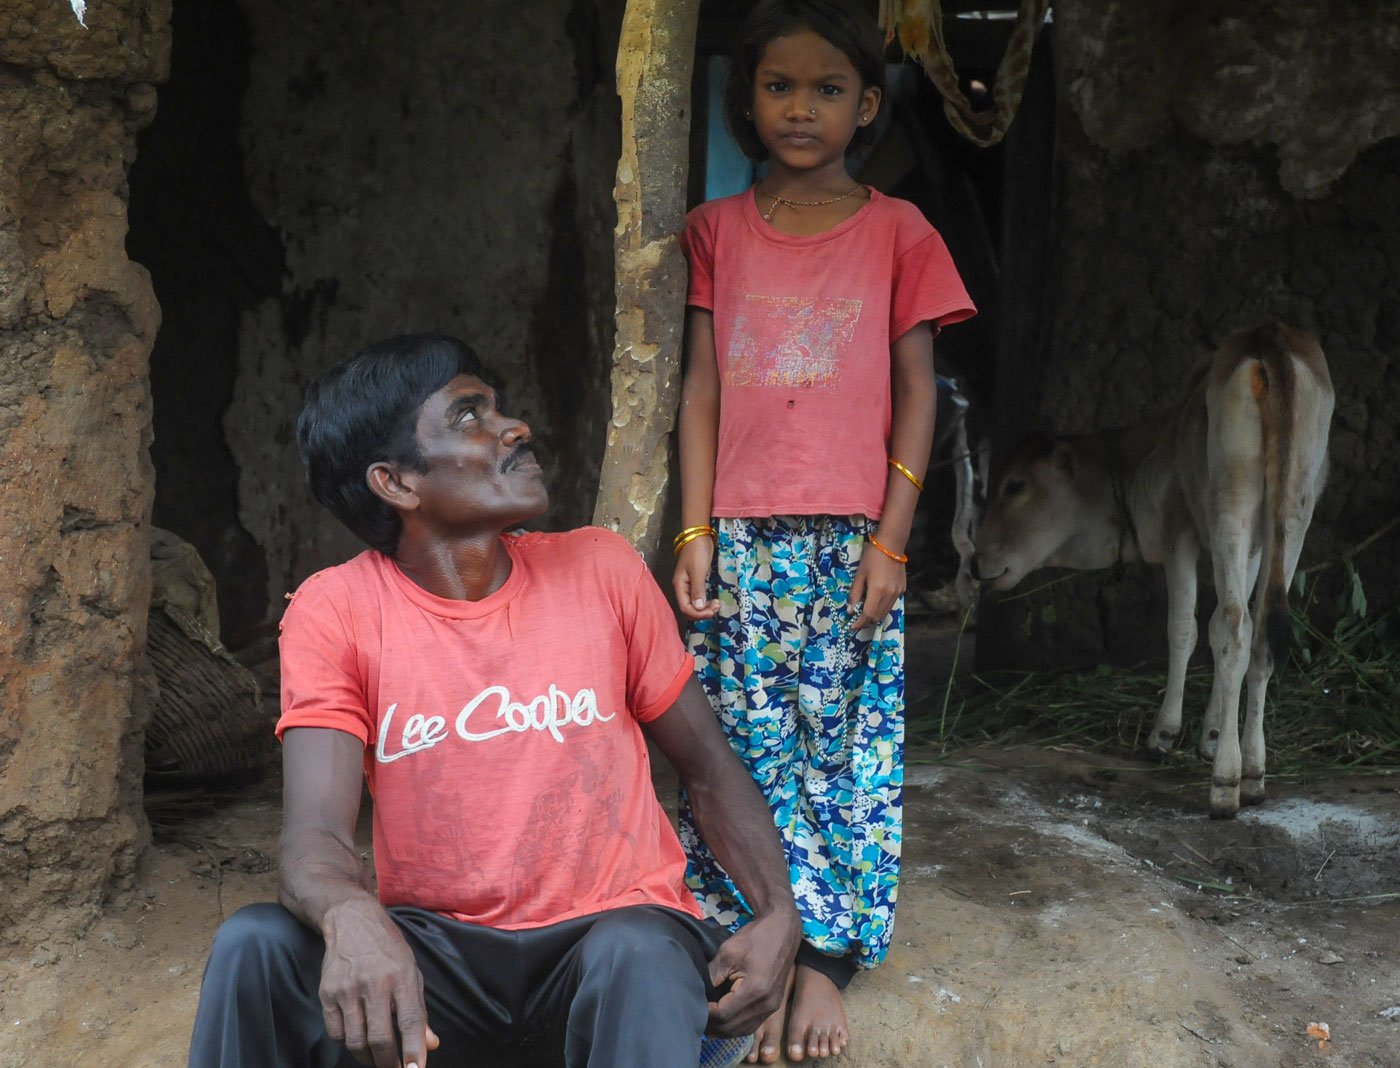 Vijay Koreti and his daughter, Vedanti, at their home in Zashinagar village, Gondia district

